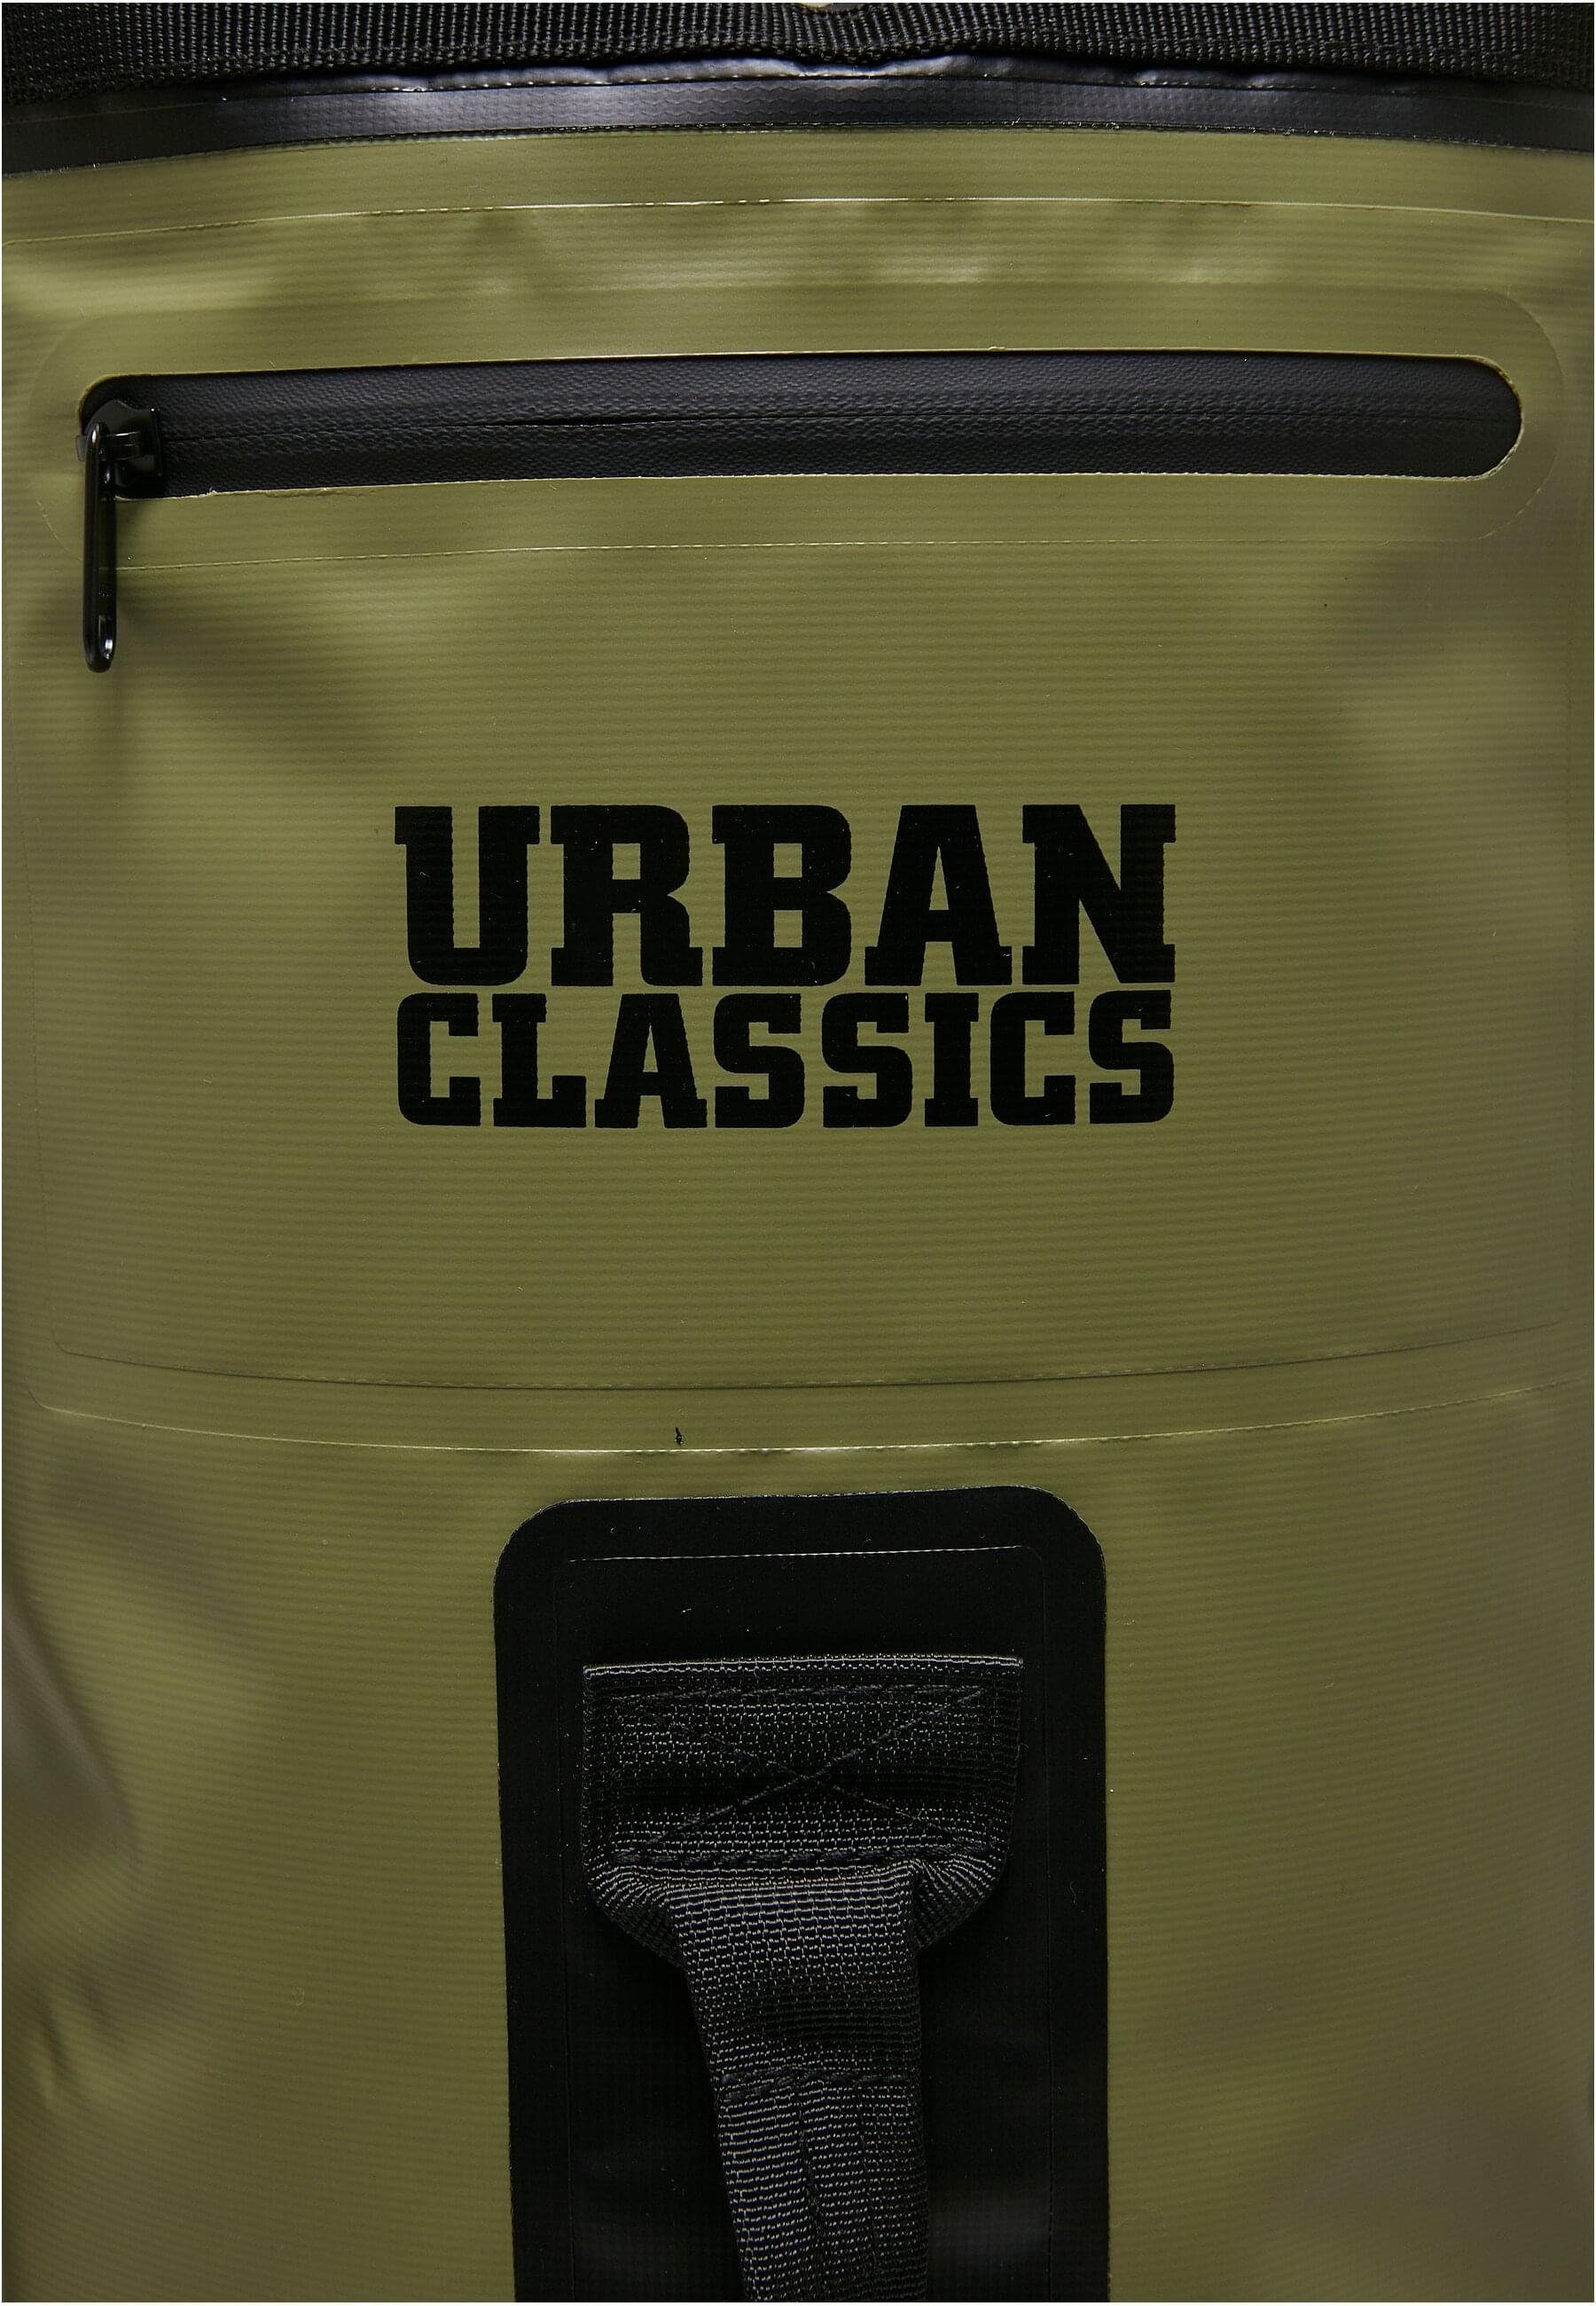 olive Unisex CLASSICS Backpack Rucksack URBAN Dry Adventure